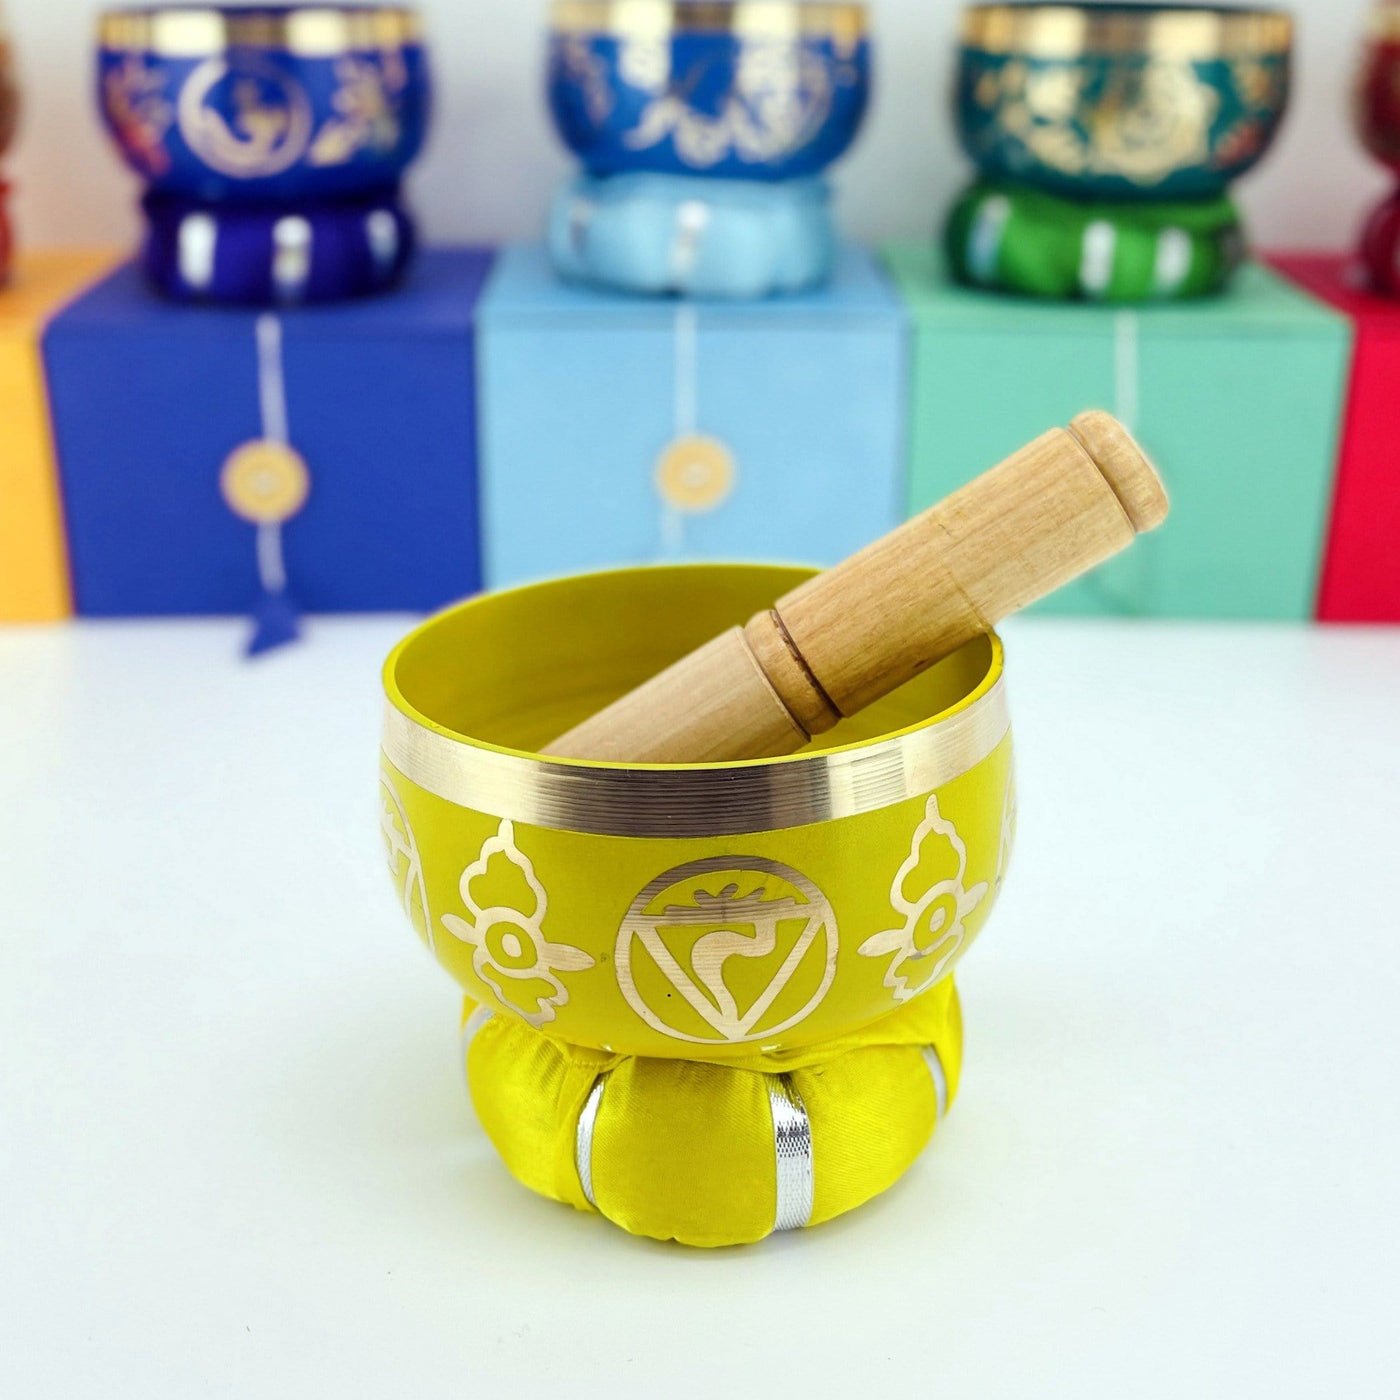 Brass Tibetan Singing Bowls - yellow bowl on a table